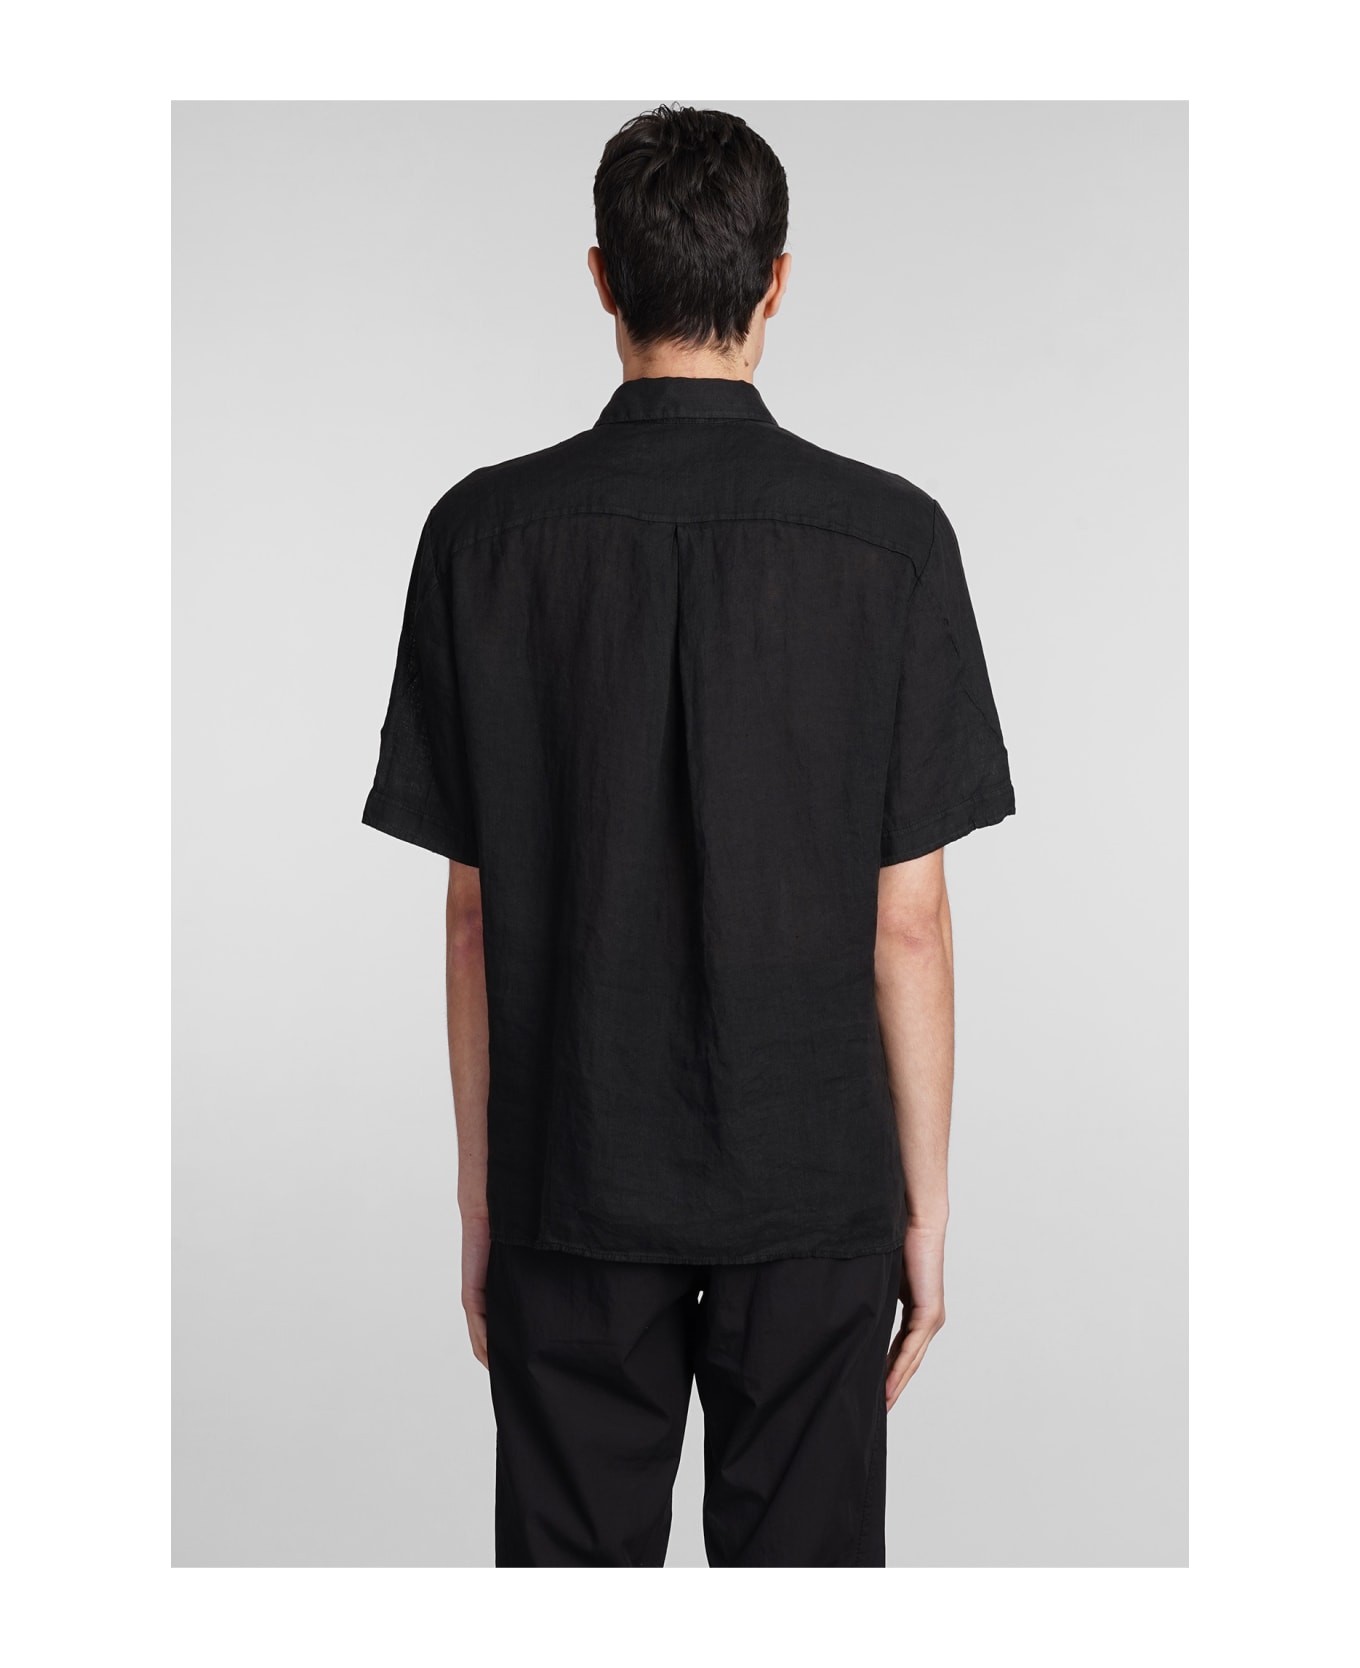 Transit Shirt In Black Linen - black